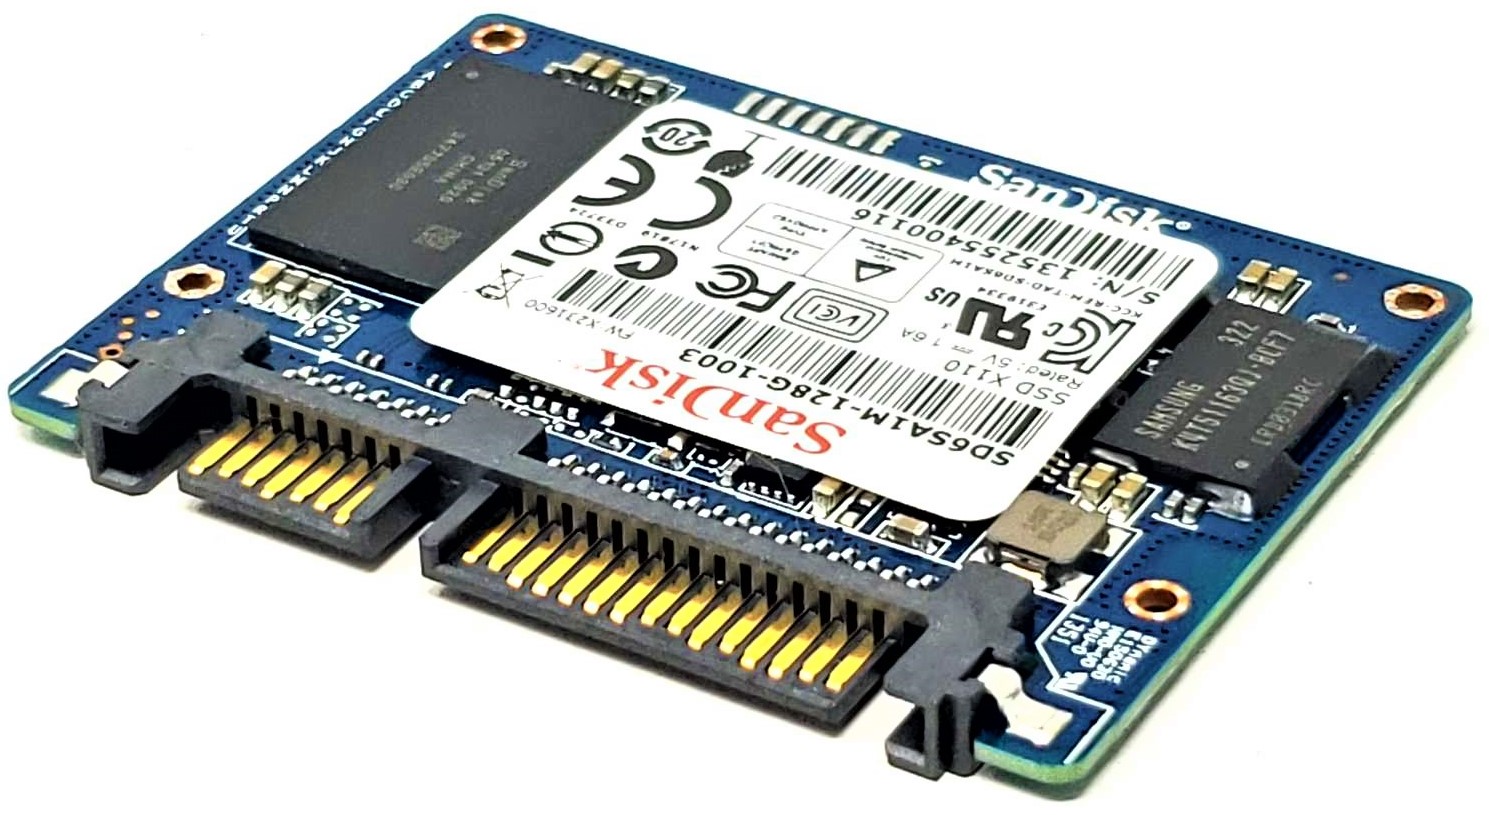 Netlist 0668-93A-128G1 - 128GB MLC Half Slim SATA Solid State SSD